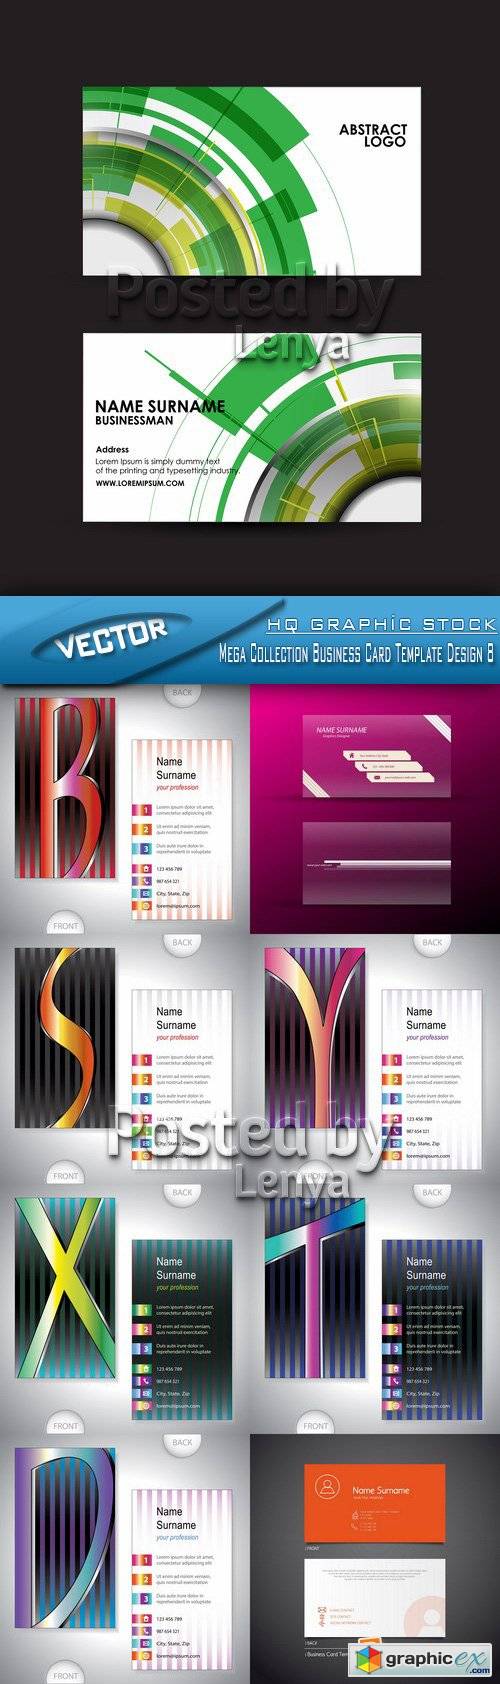 Stock Vector - Mega Collection Business Card Template Design 8